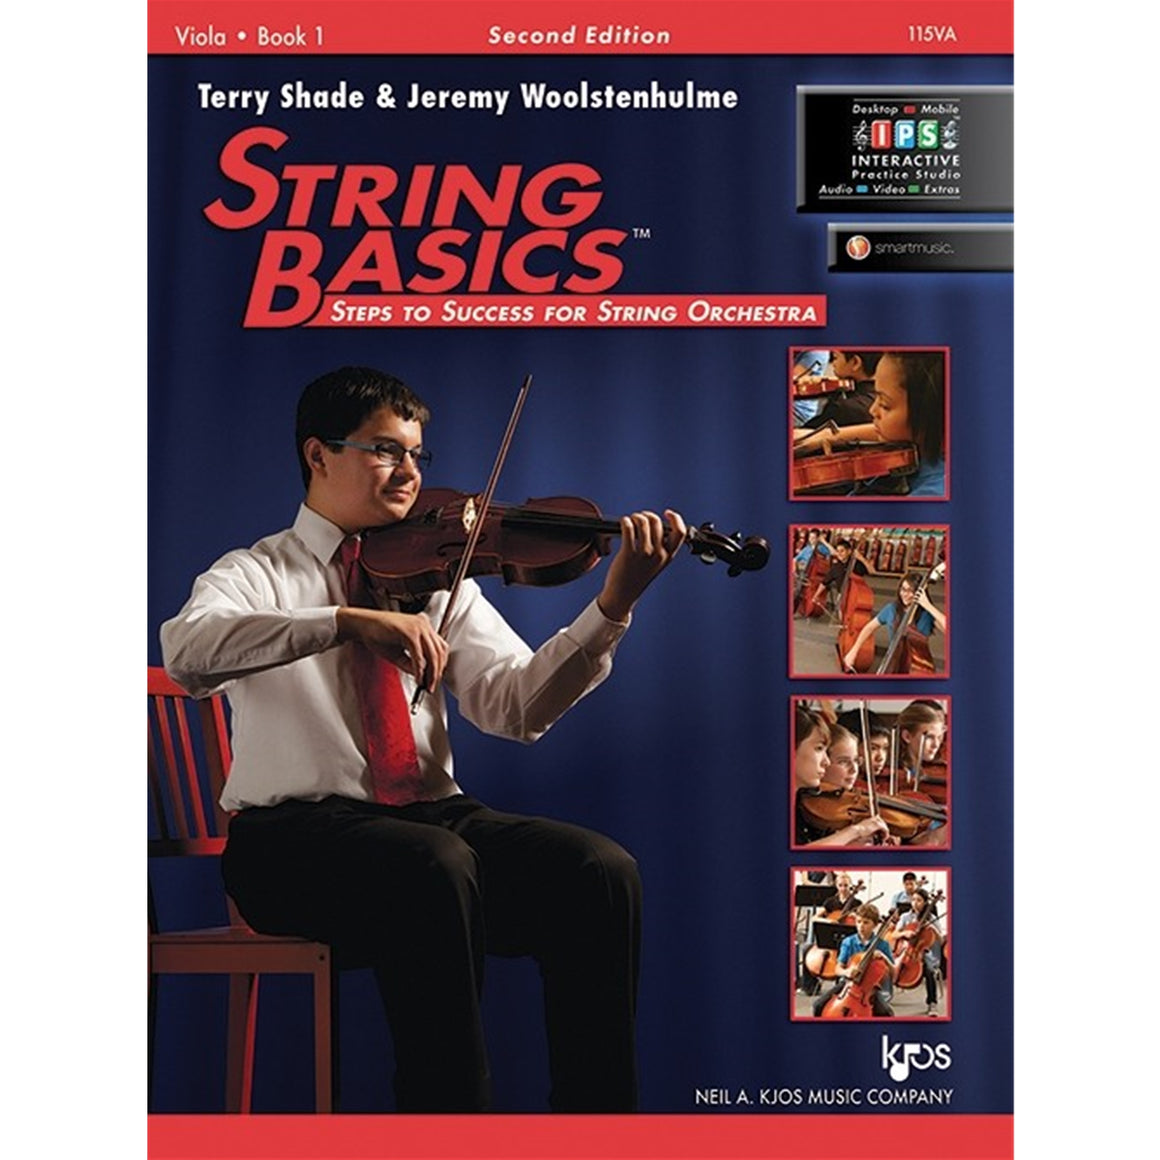 KJOS 115VA String Basics Viola Book 1